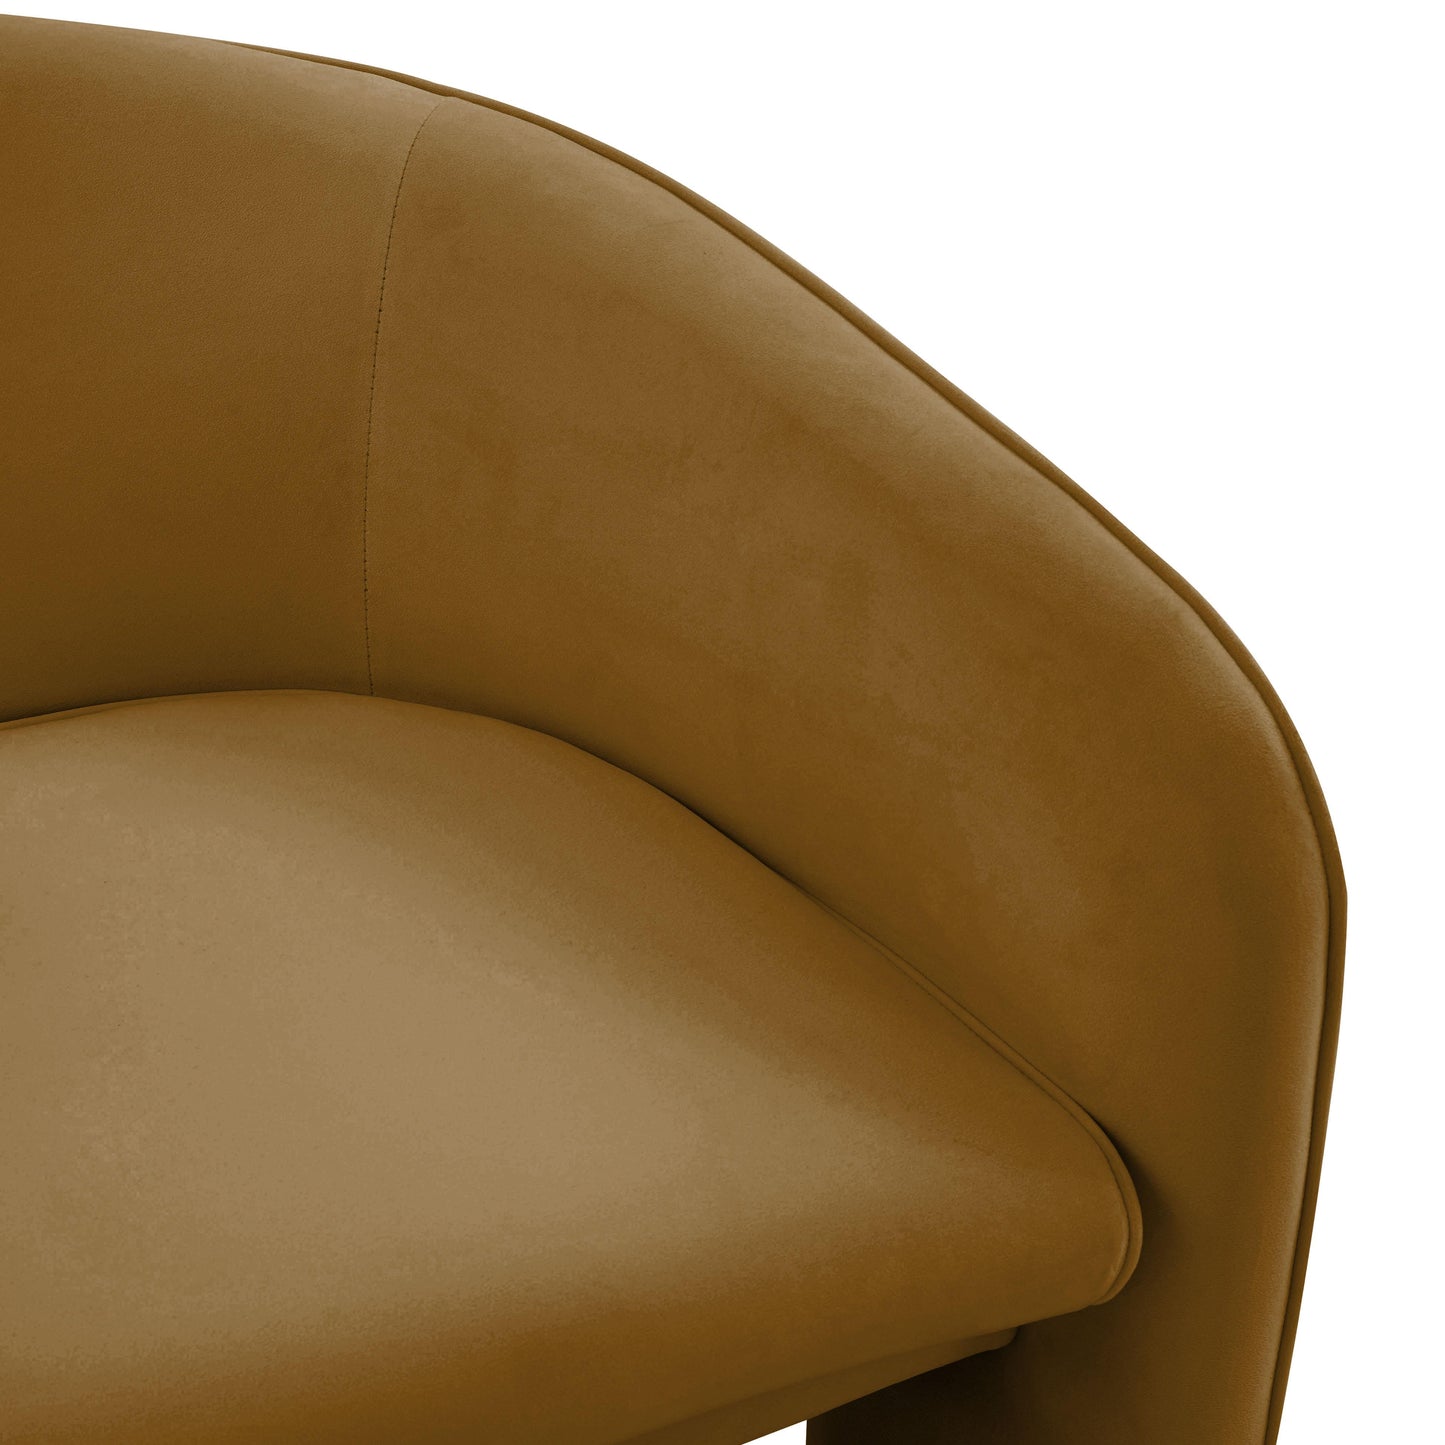 Marla Cognac Velvet Accent Chair by TOV